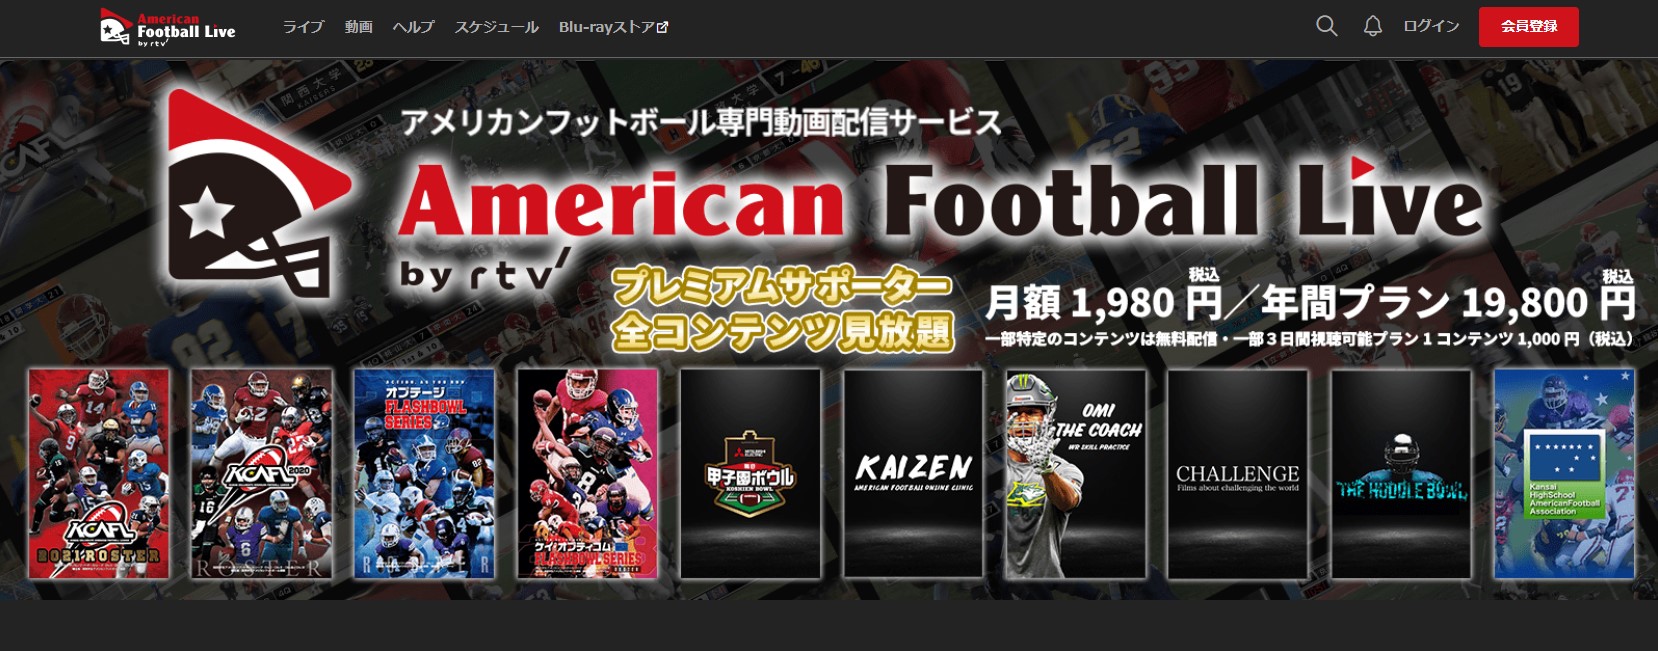 American Football Live by RTV